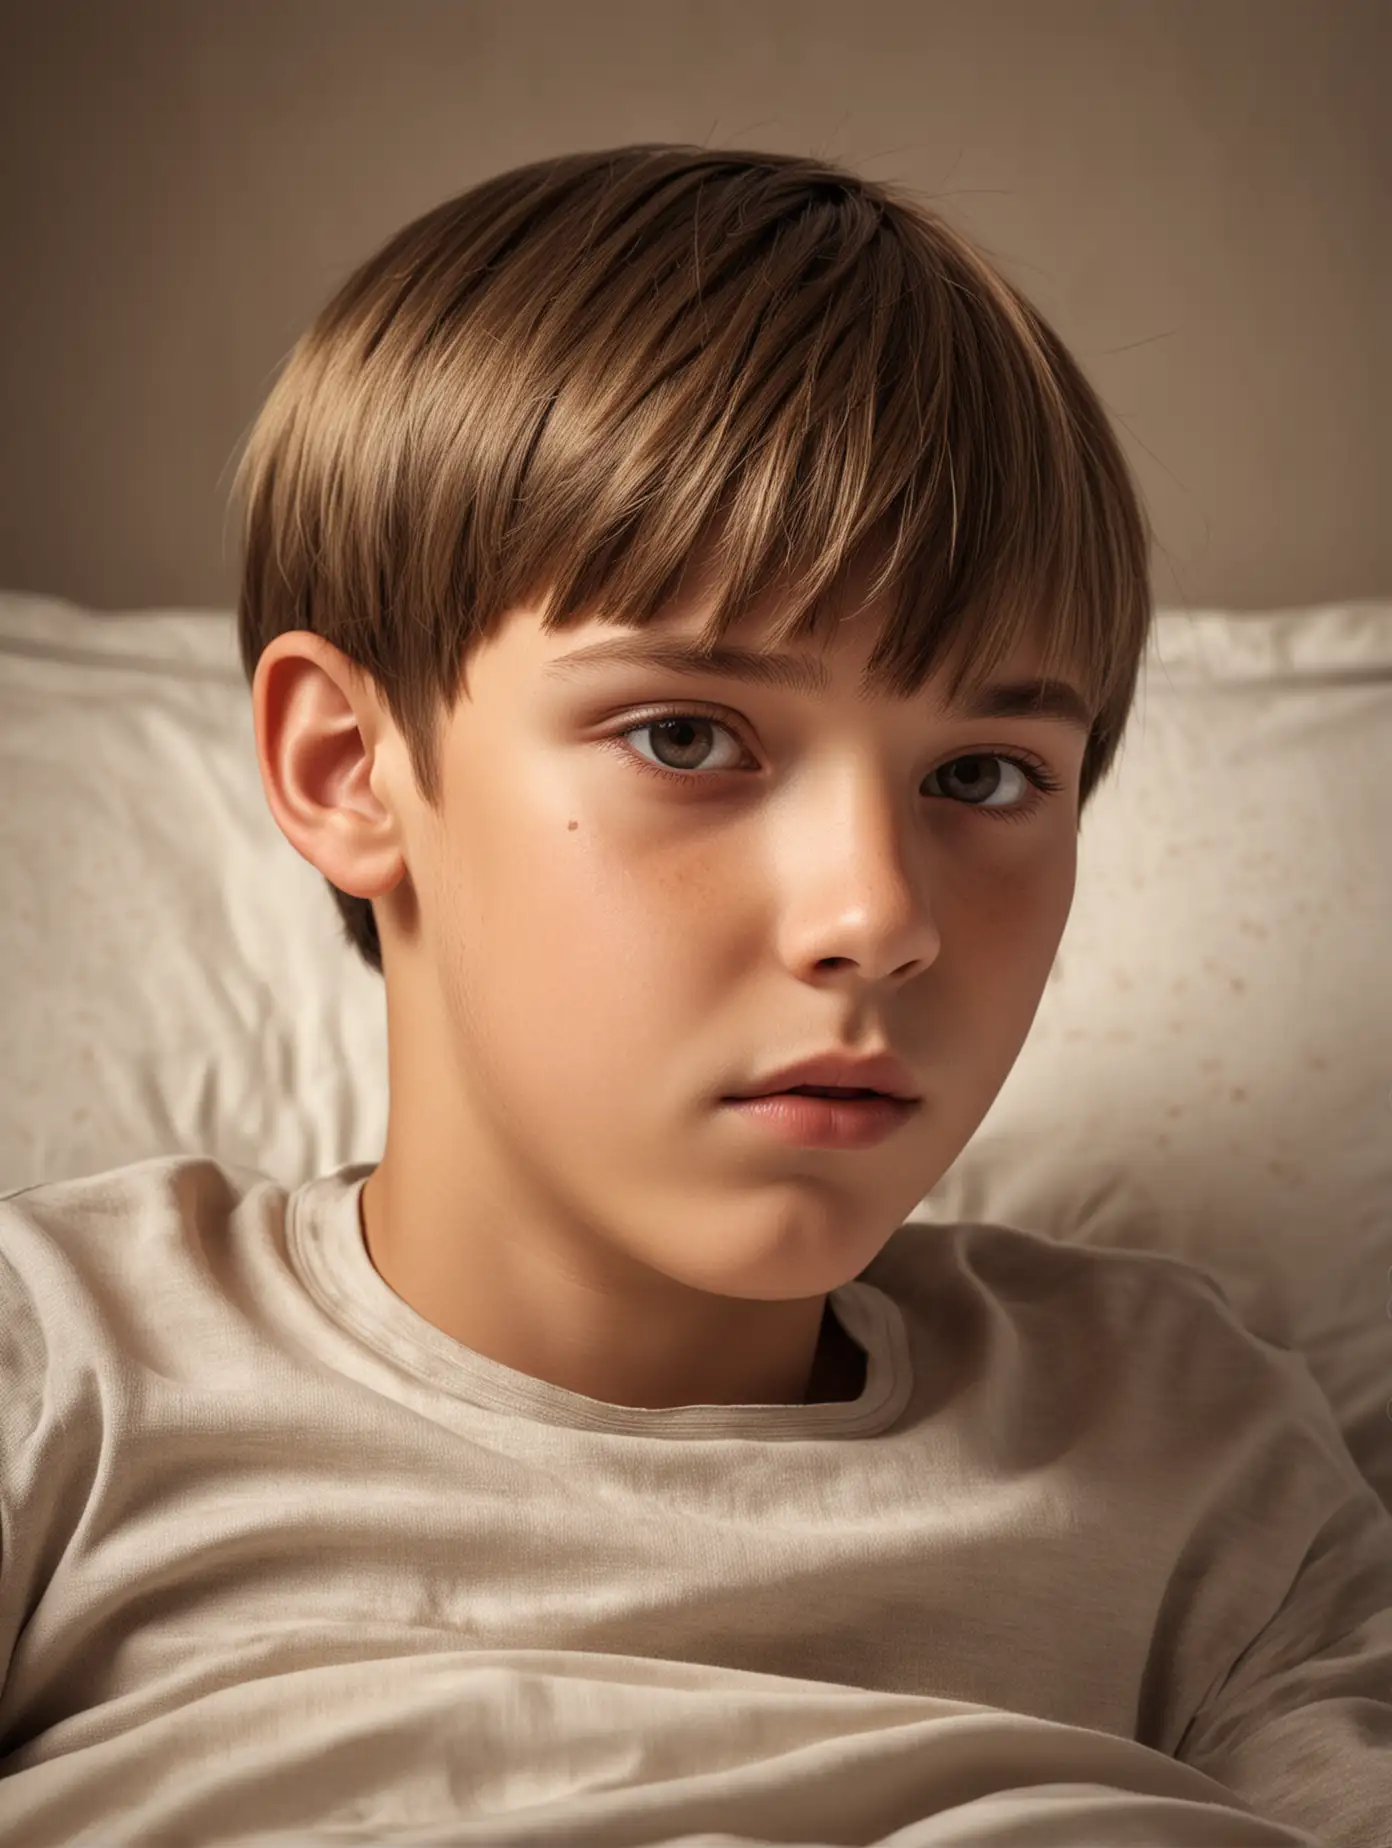 CloseUp Portrait of TwelveYearOld Boy with Smooth Light Brown Bowl Cut Hair